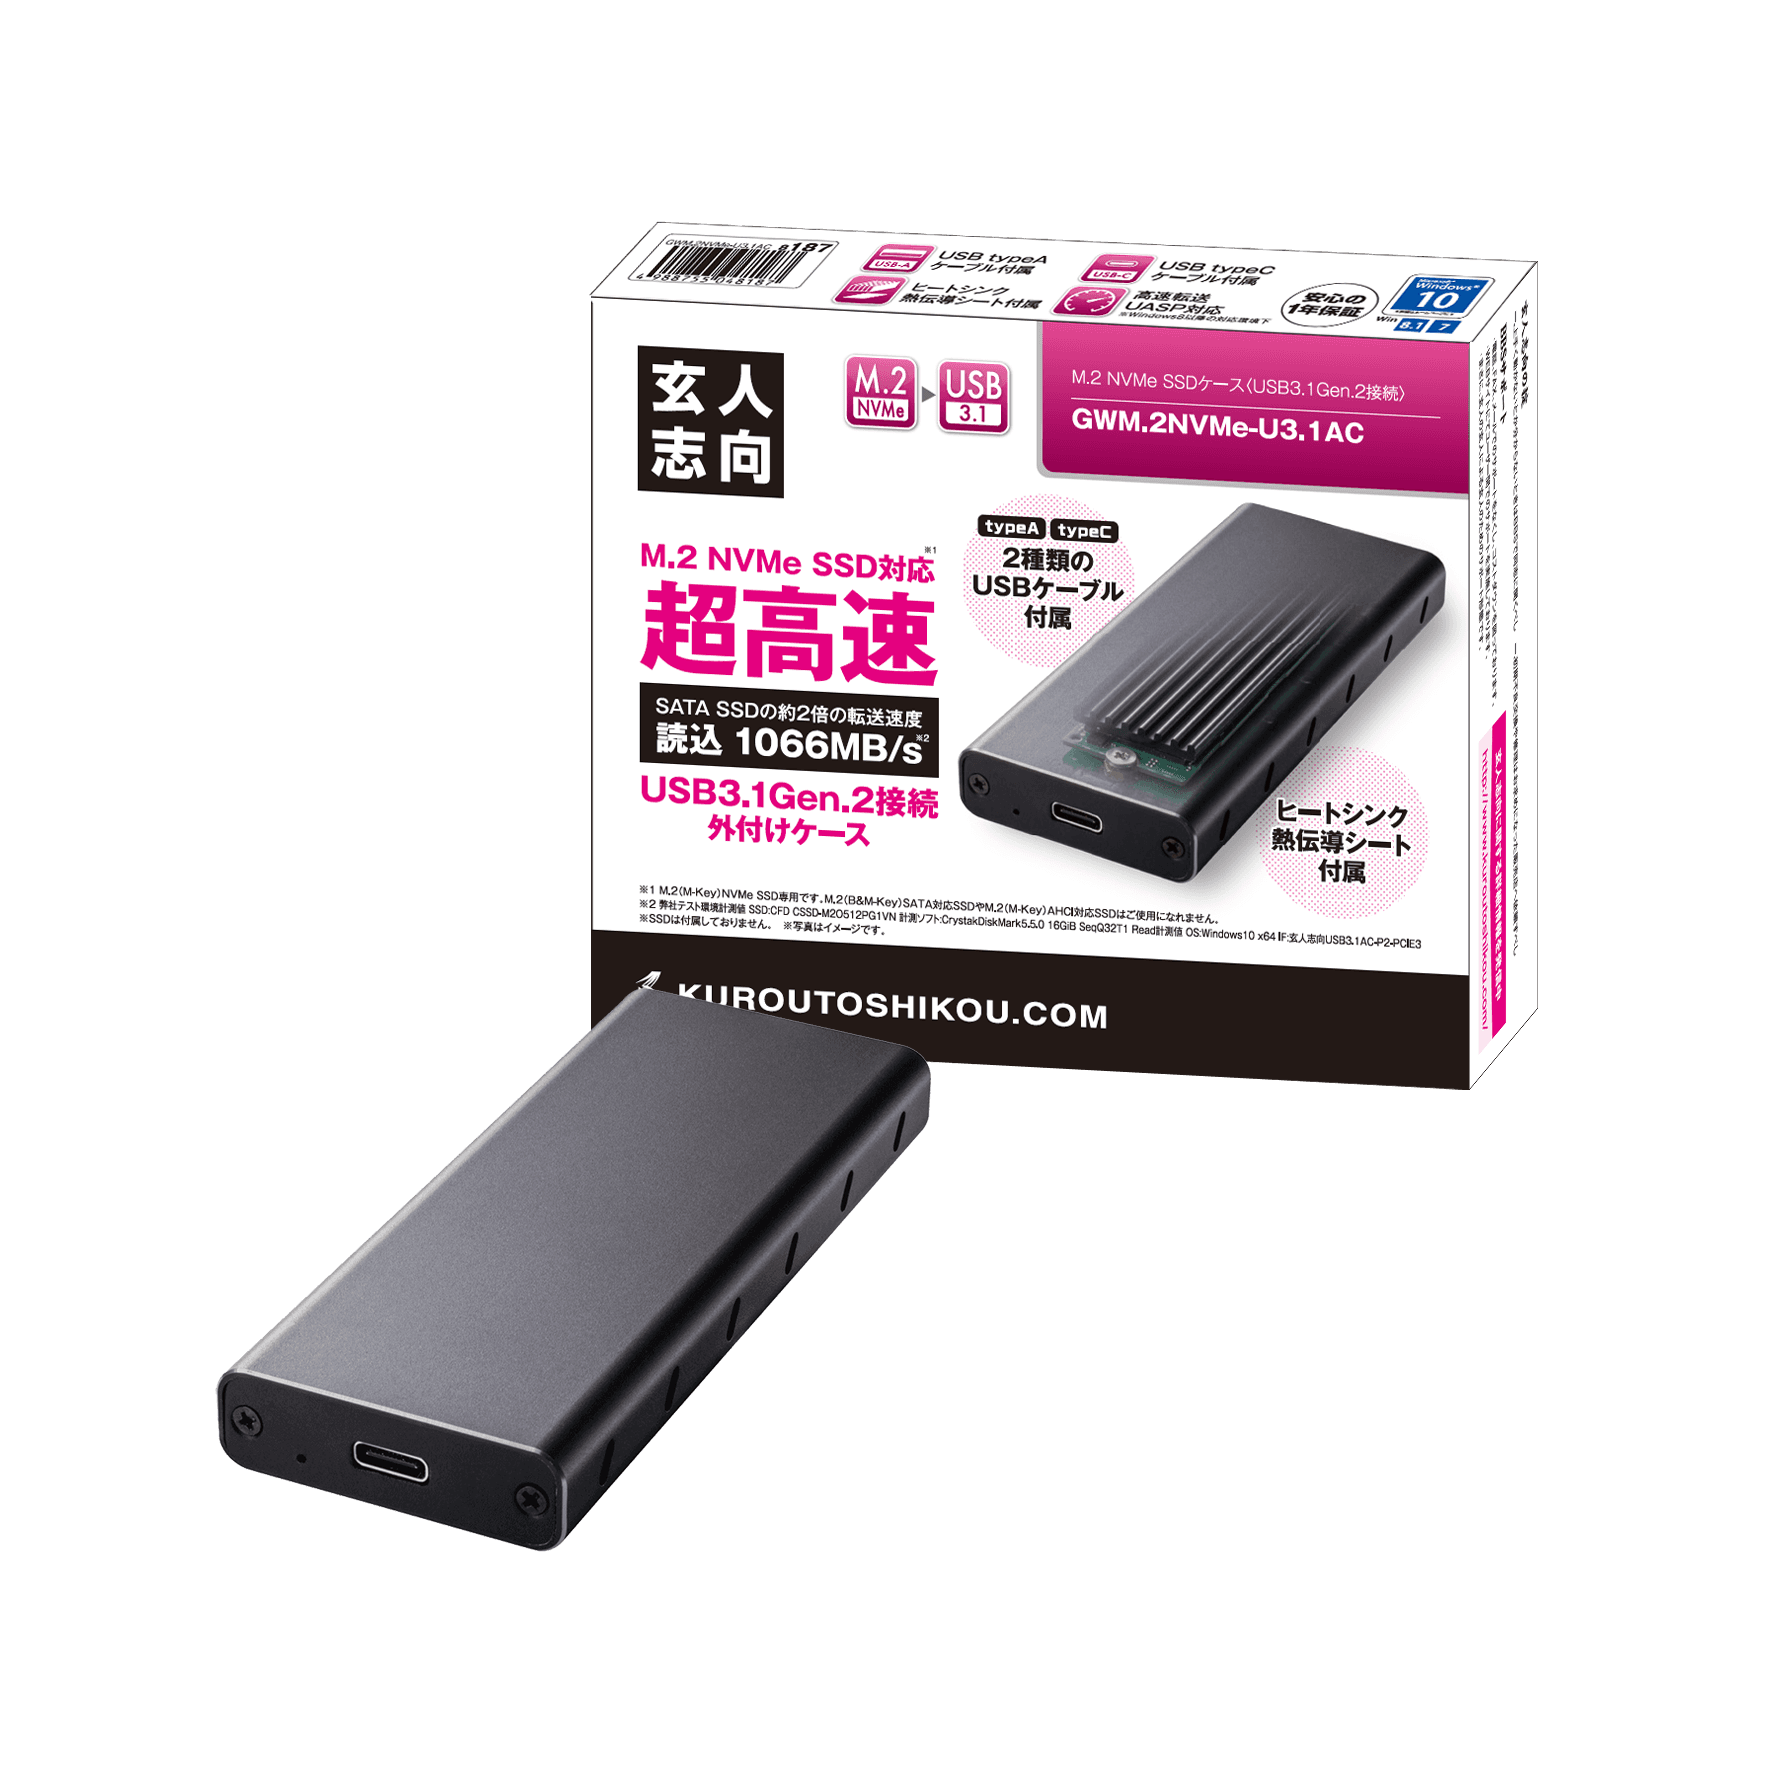 SSD / HDDケース | CFD販売株式会社 CFD Sales INC.